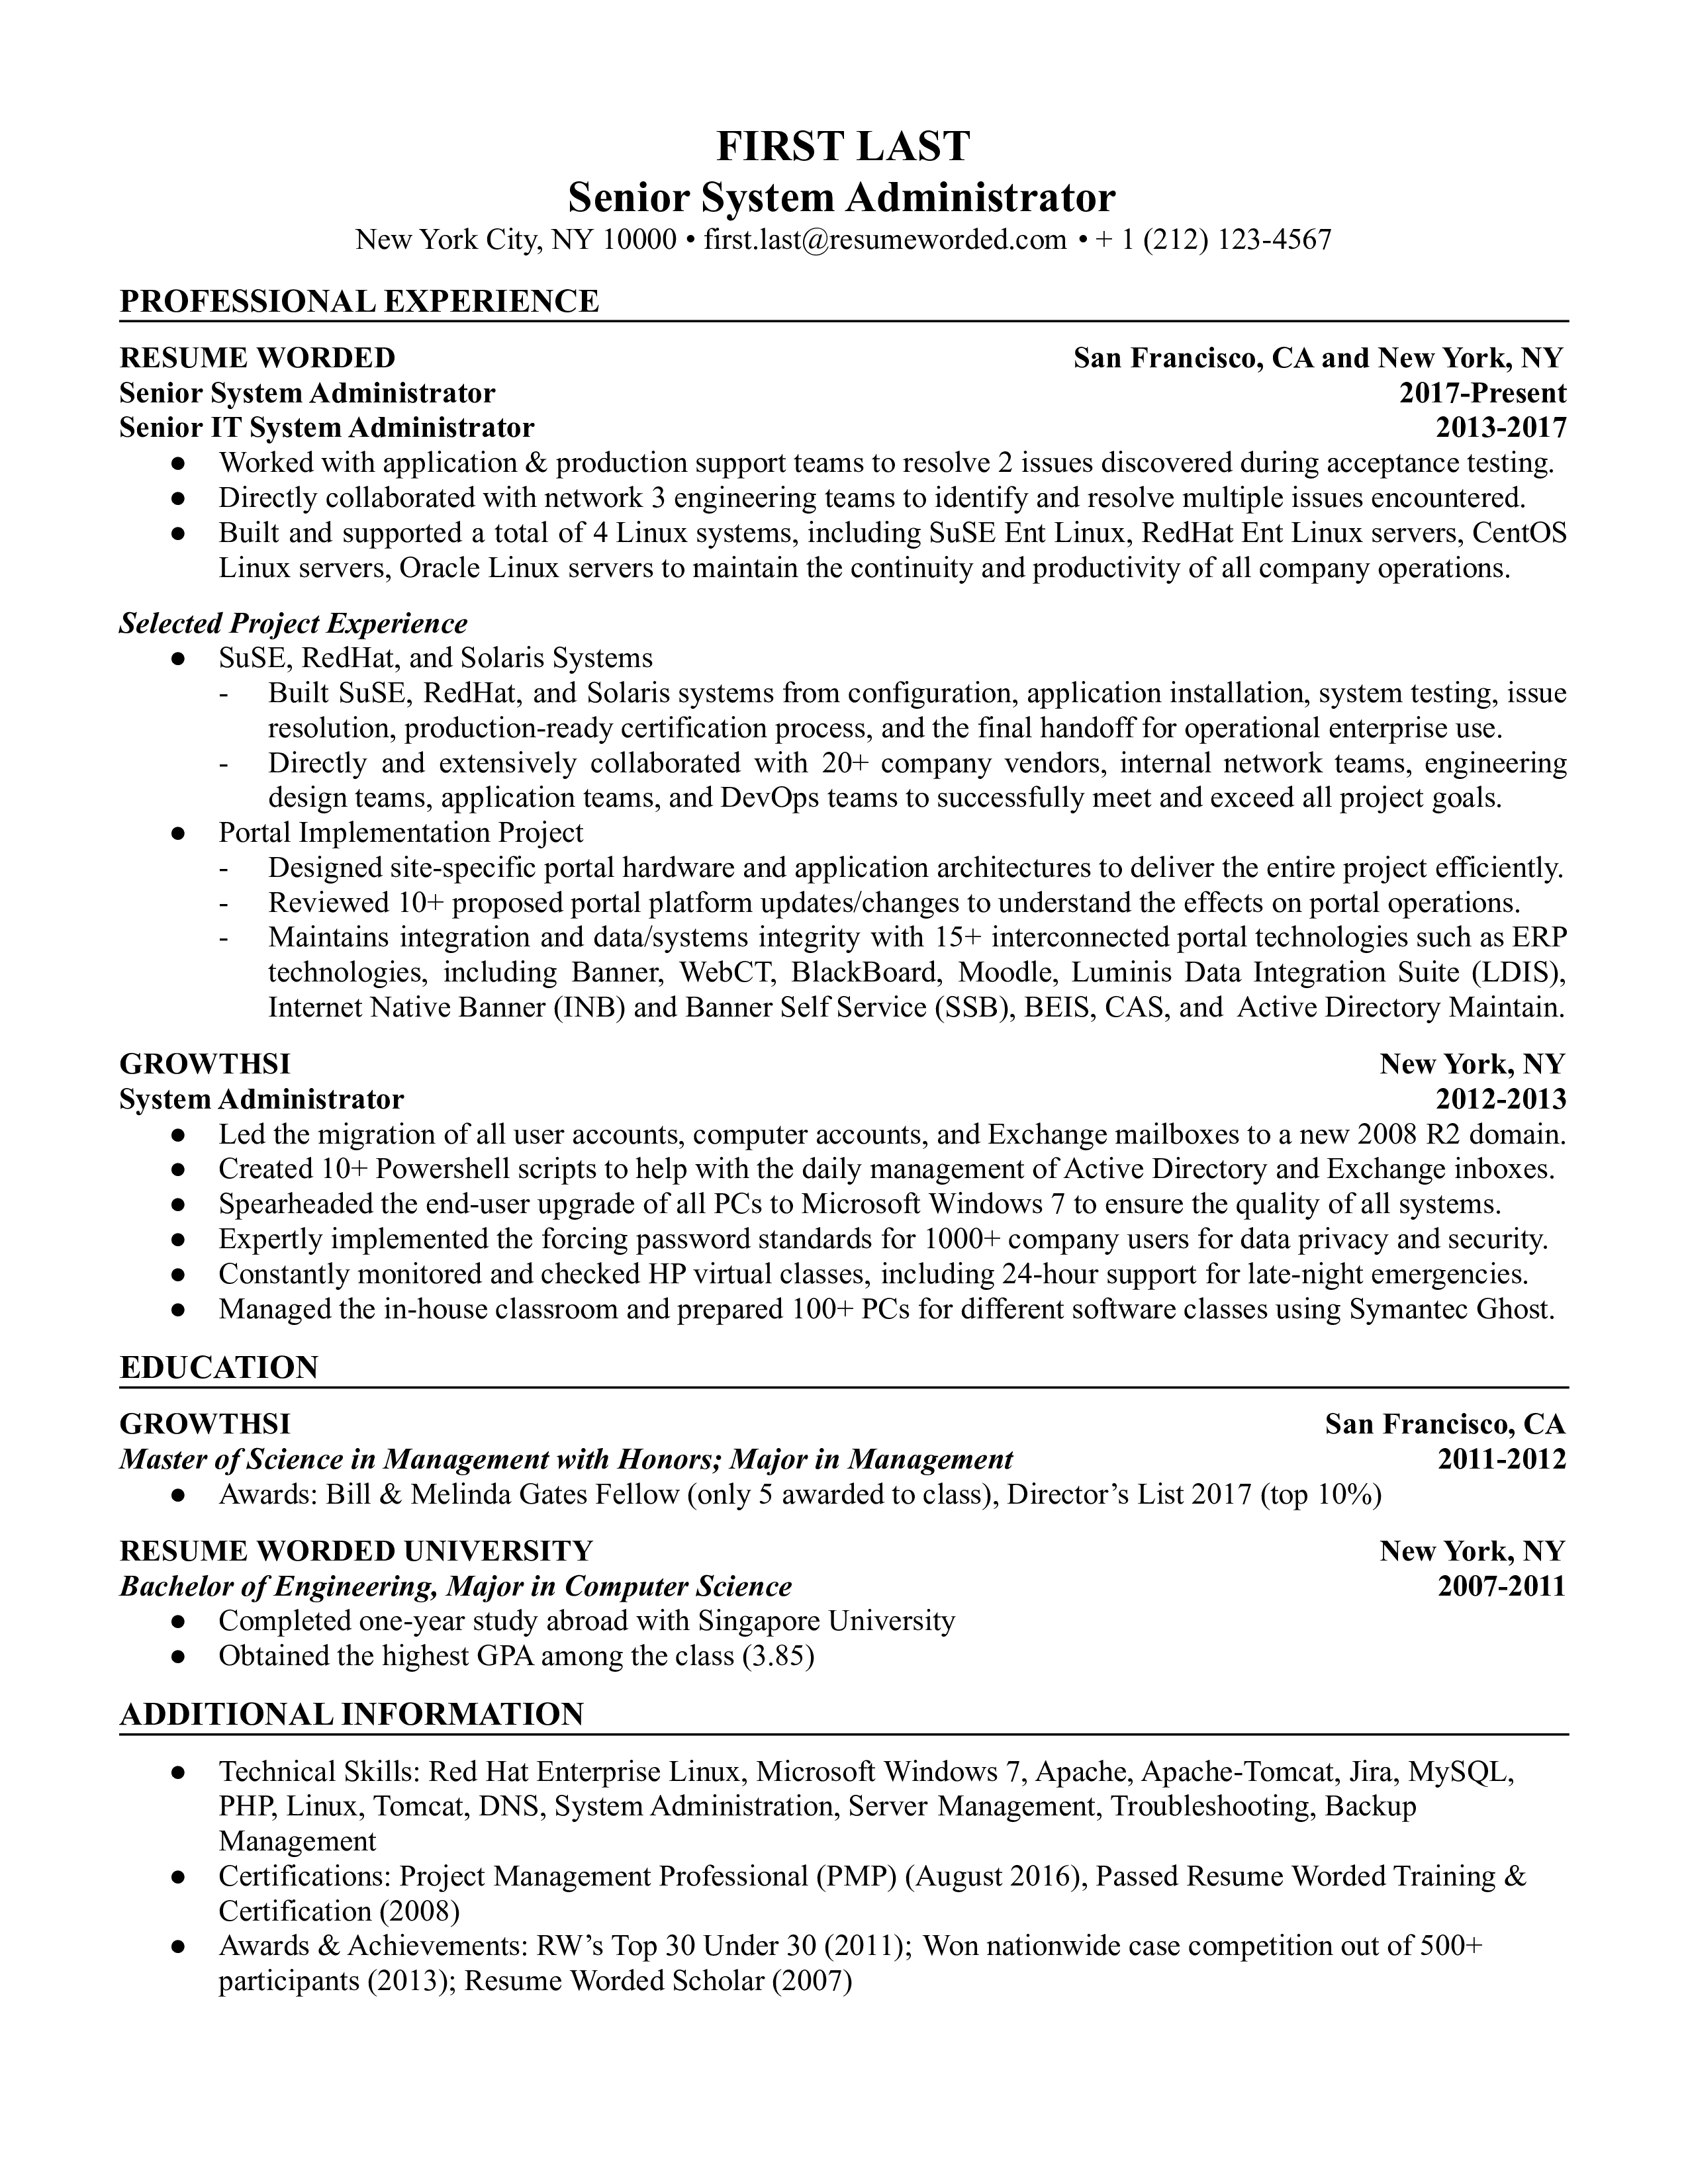 Senior System Administrator resume example for job hunters in 2023